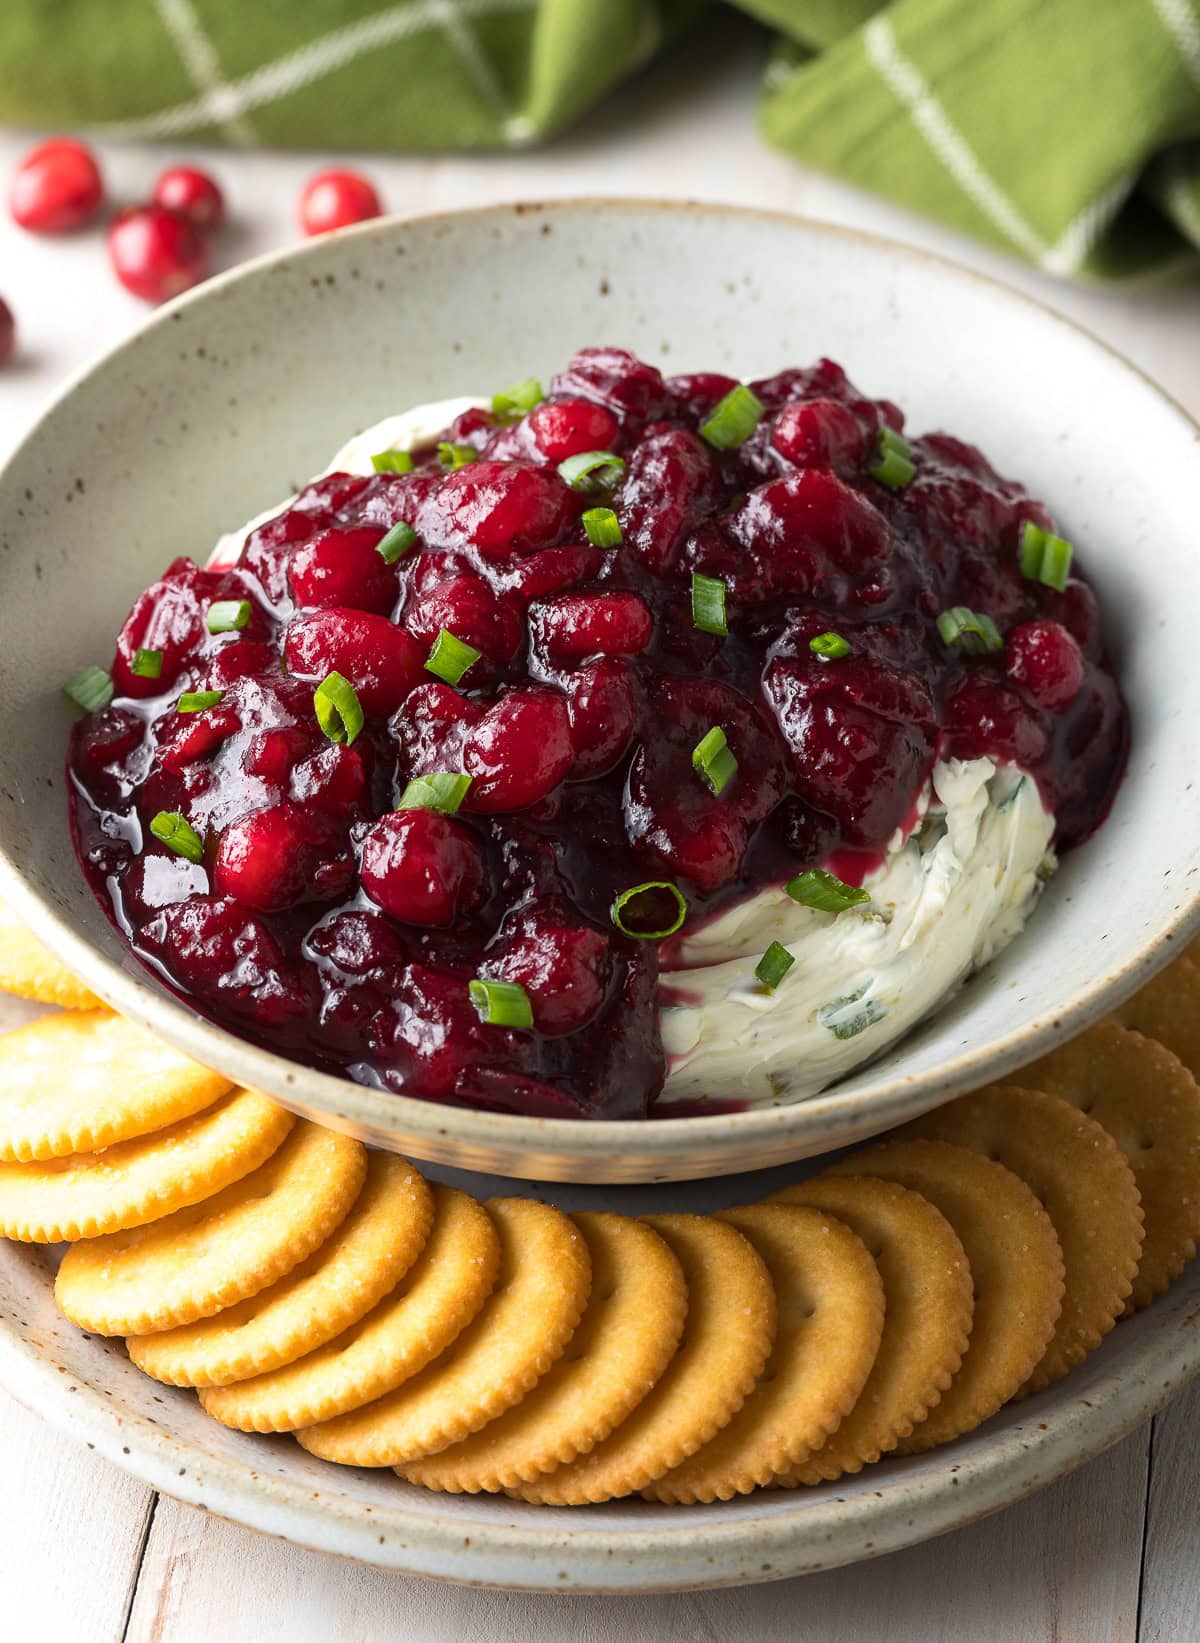 Perky Cranberry Jalapeno Dip (Cream Cheese Dip) Recipe (VIDEO)